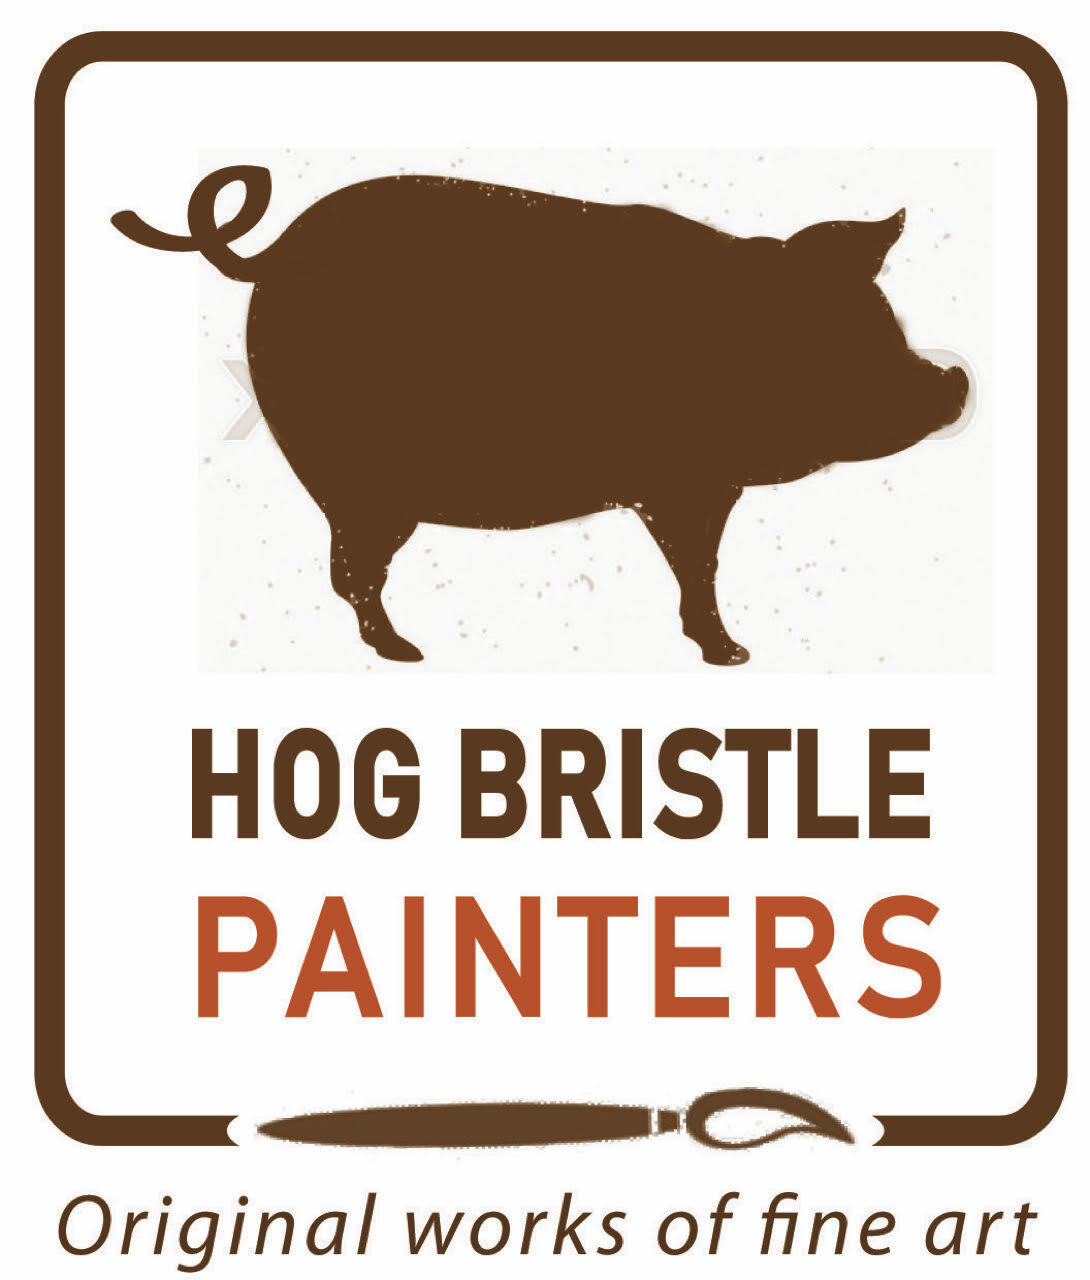 Hog Bristle Painters